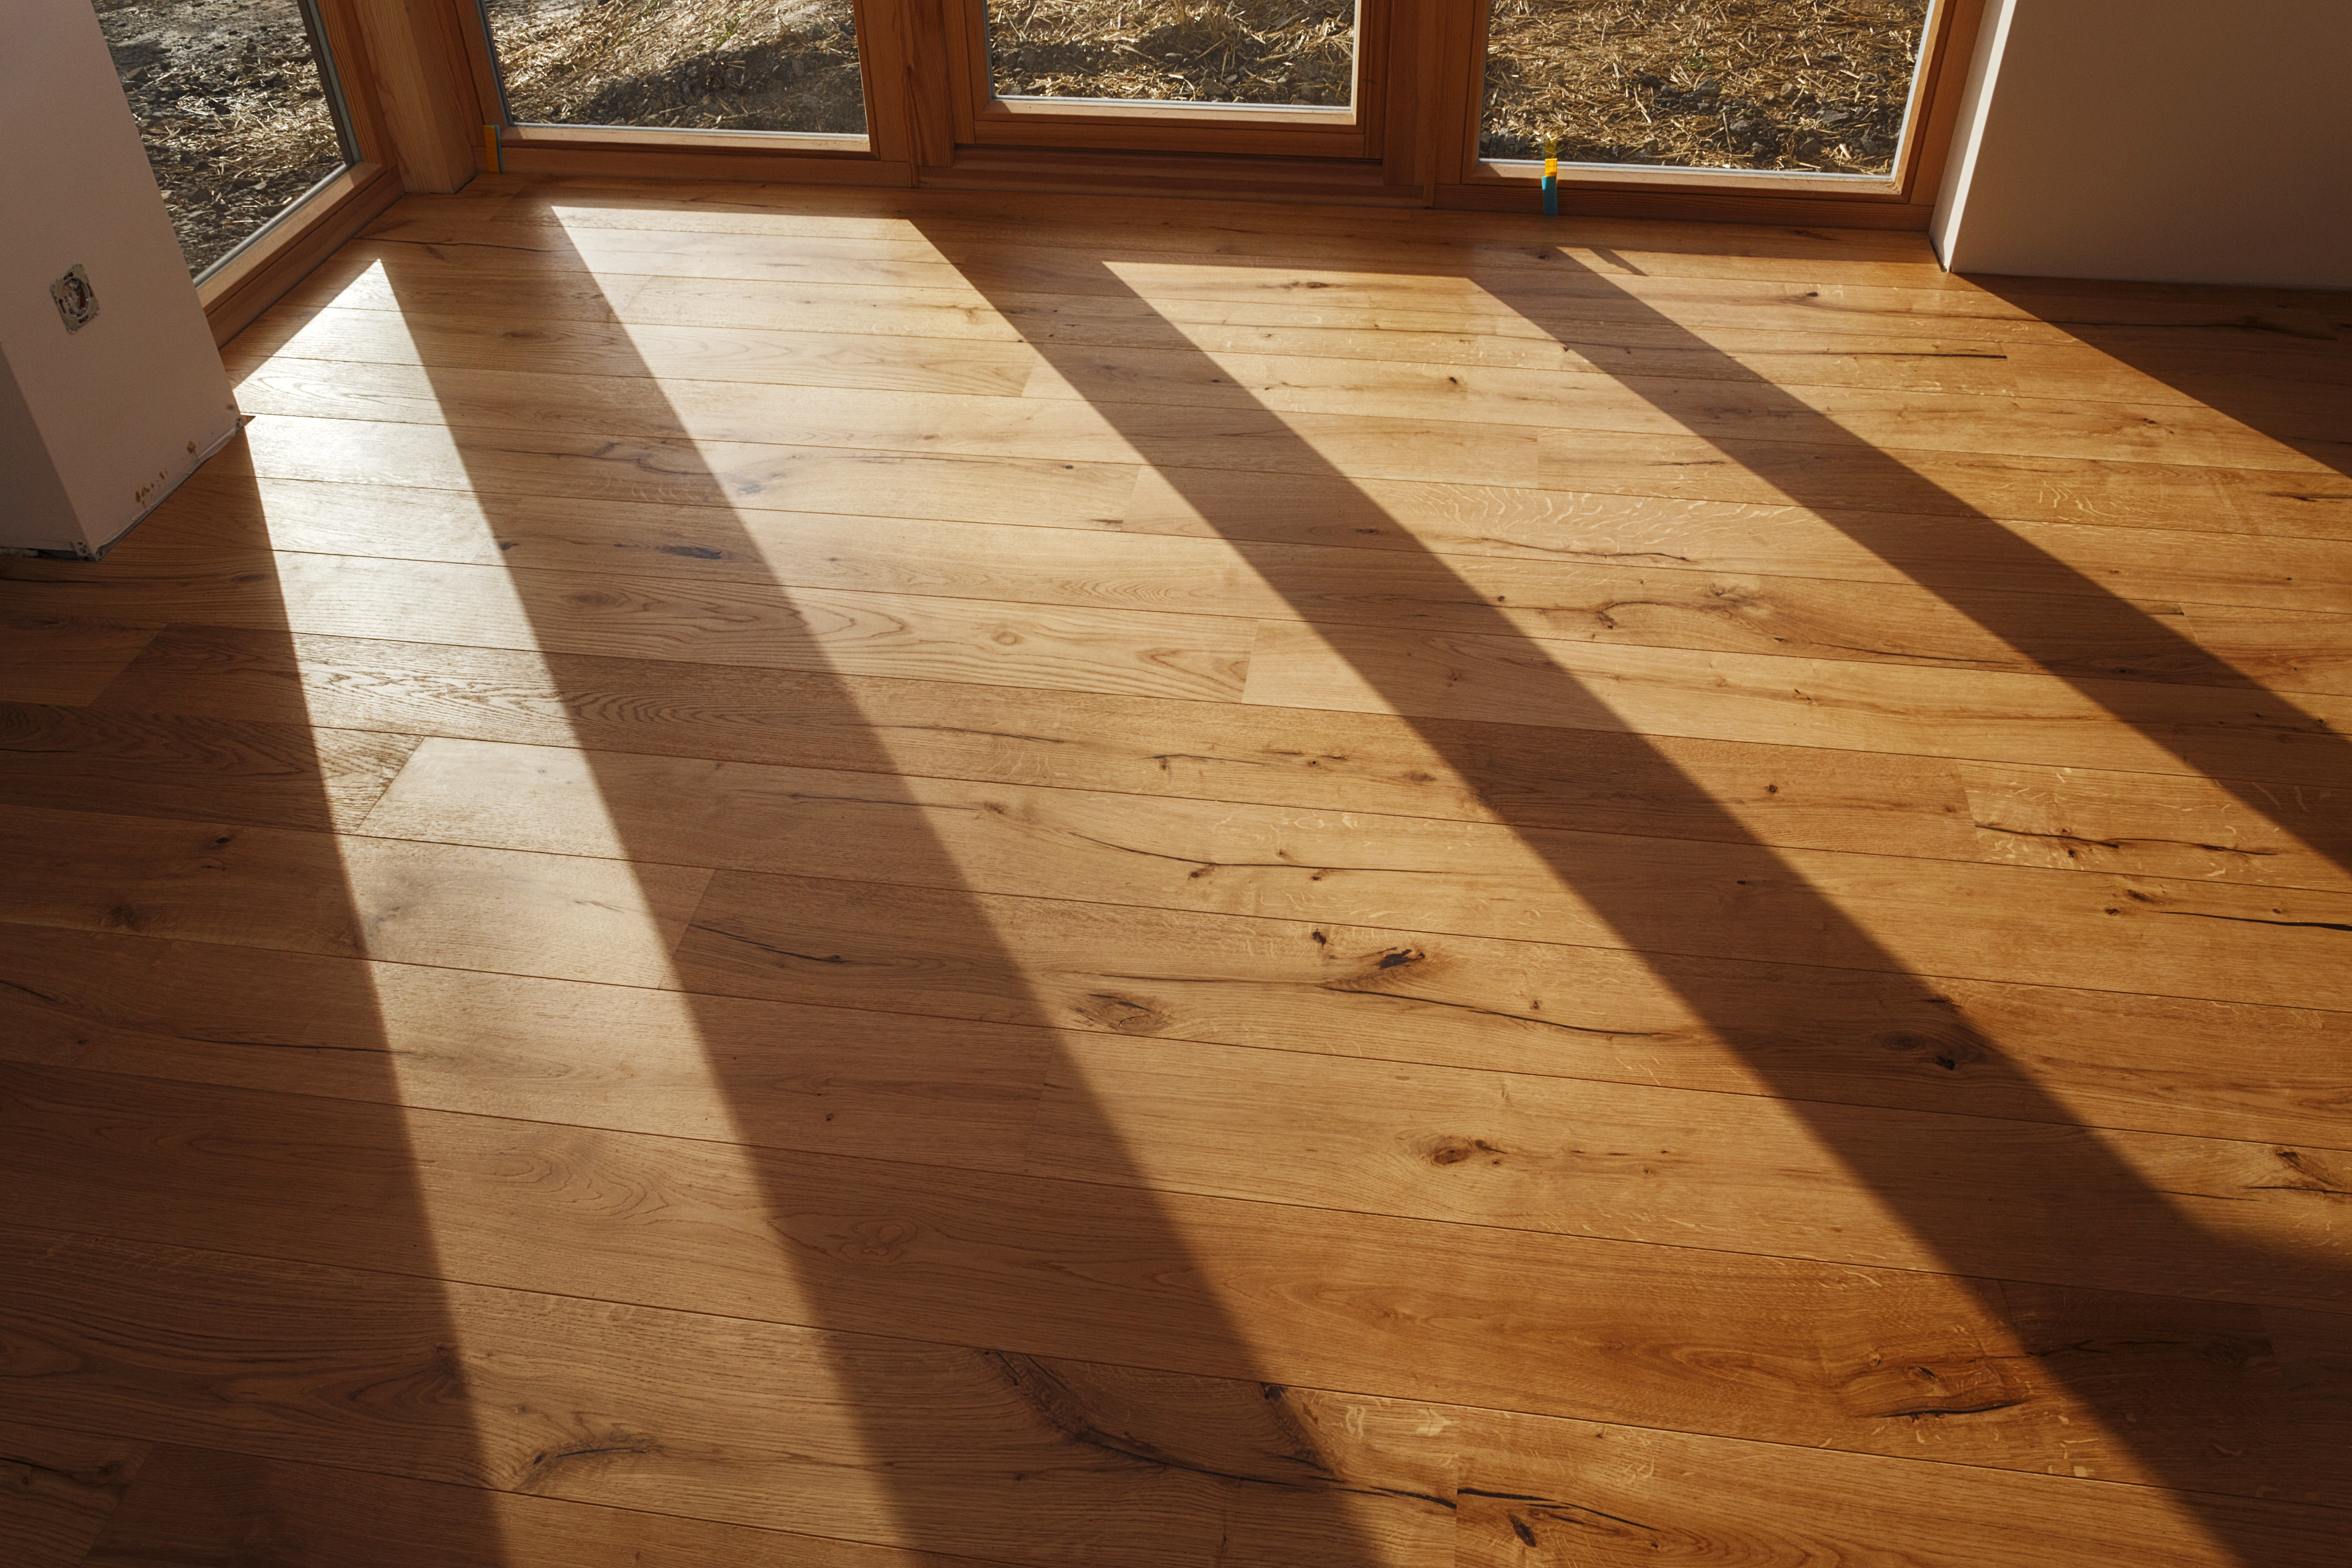 Wood Flooring Hardwood Versus, Cost Of Parquet Flooring Vs Hardwood